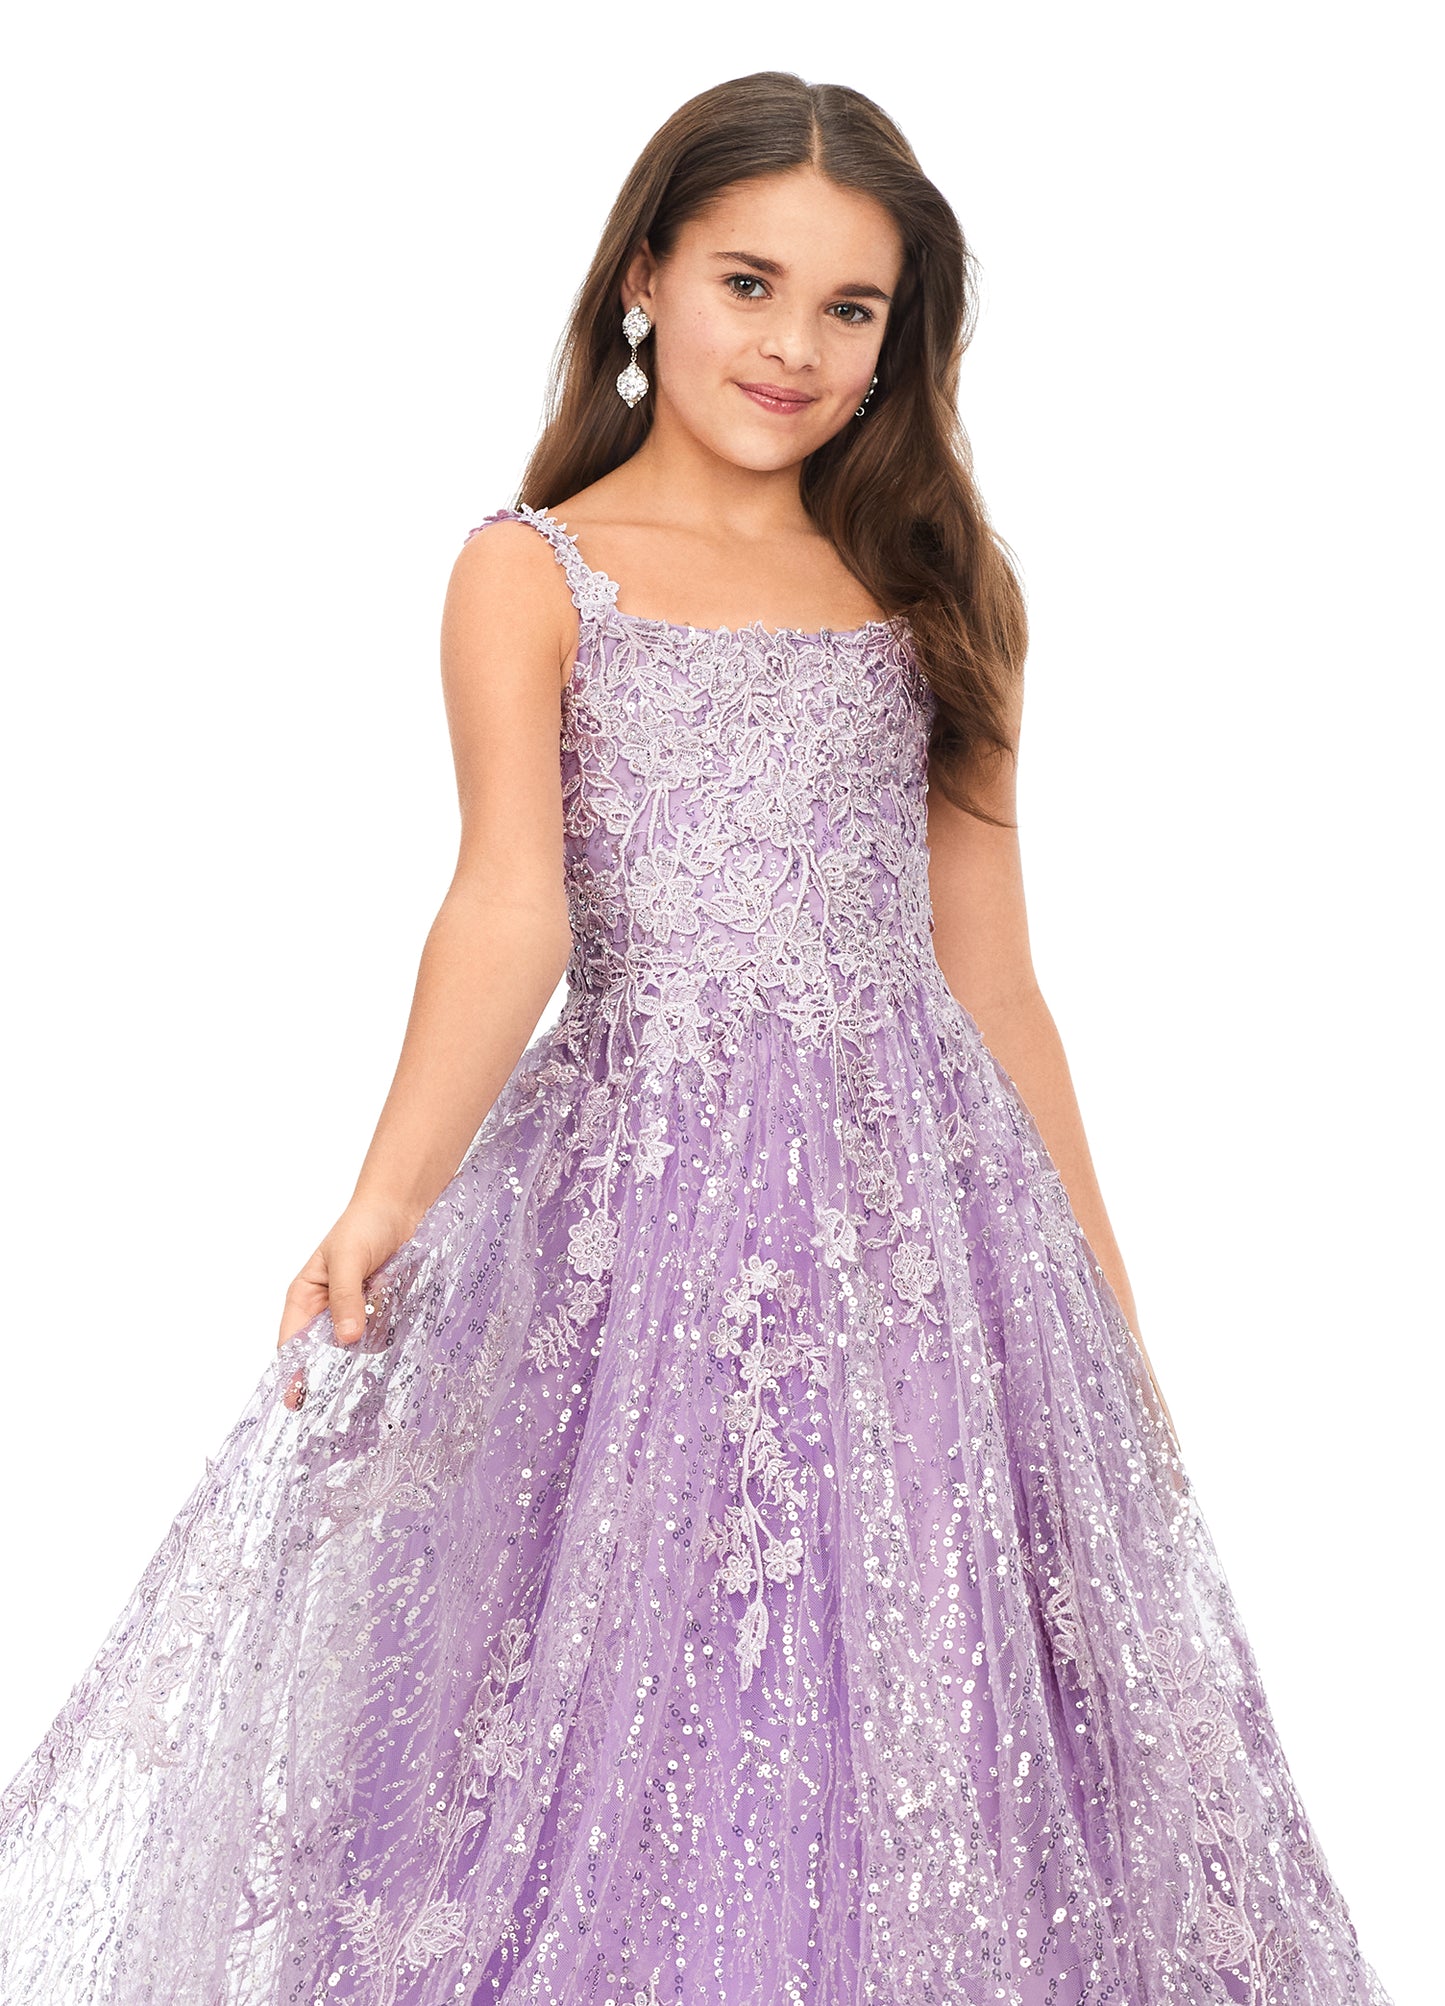 Ashley Lauren Kids 8185 Size 14 LILAC Girls Preteens Glitter Lace Formal Dress Ball Gown